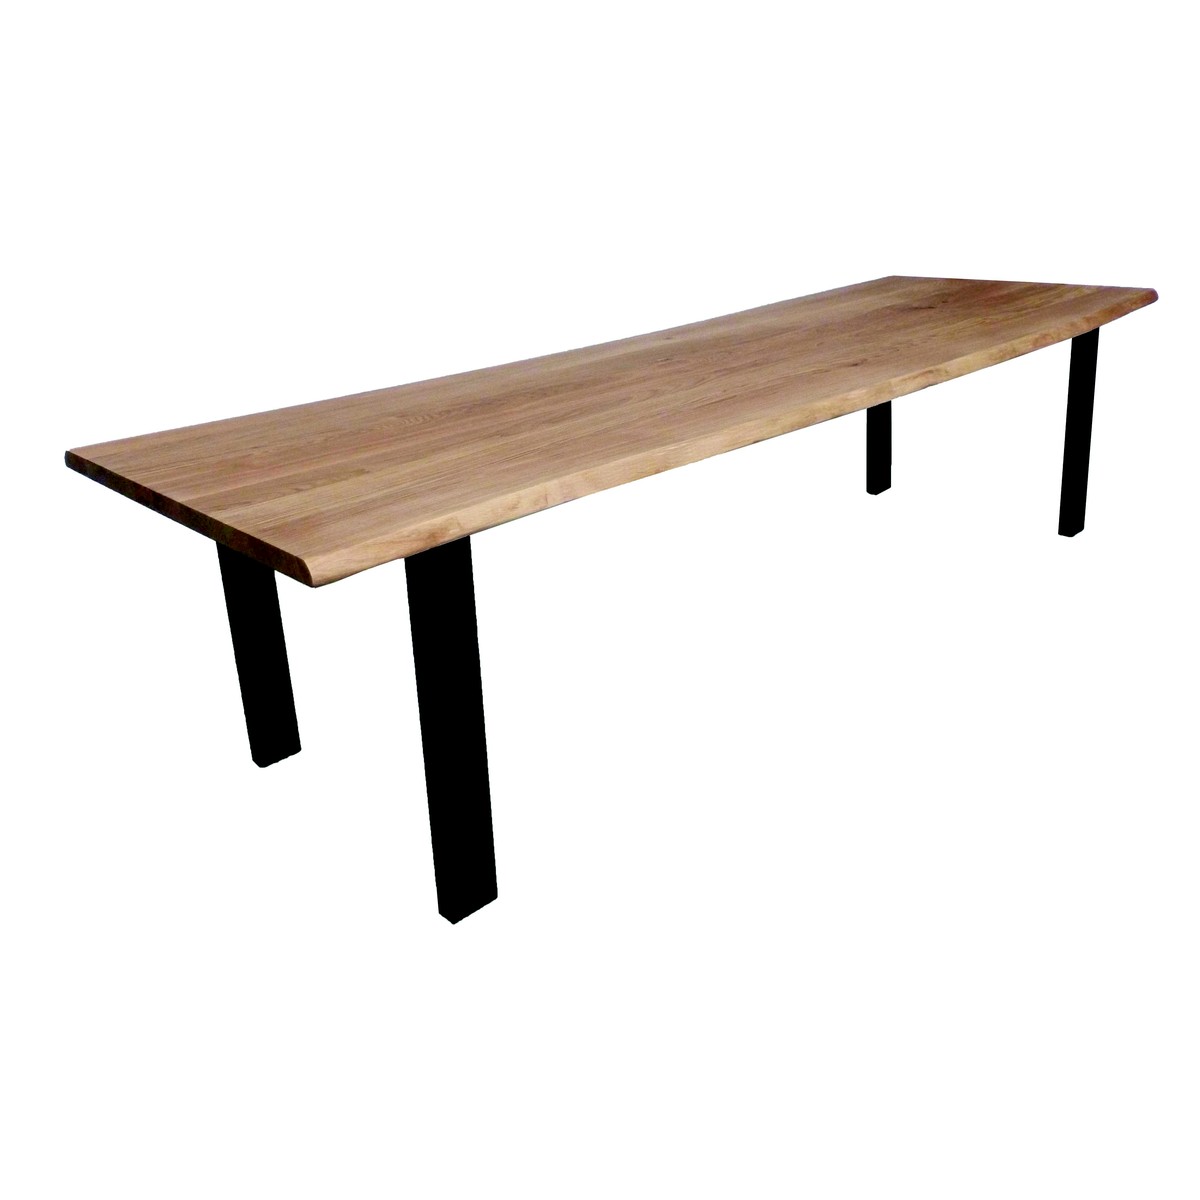   Table Eden Trunk rectangulaire  160x100x77cm